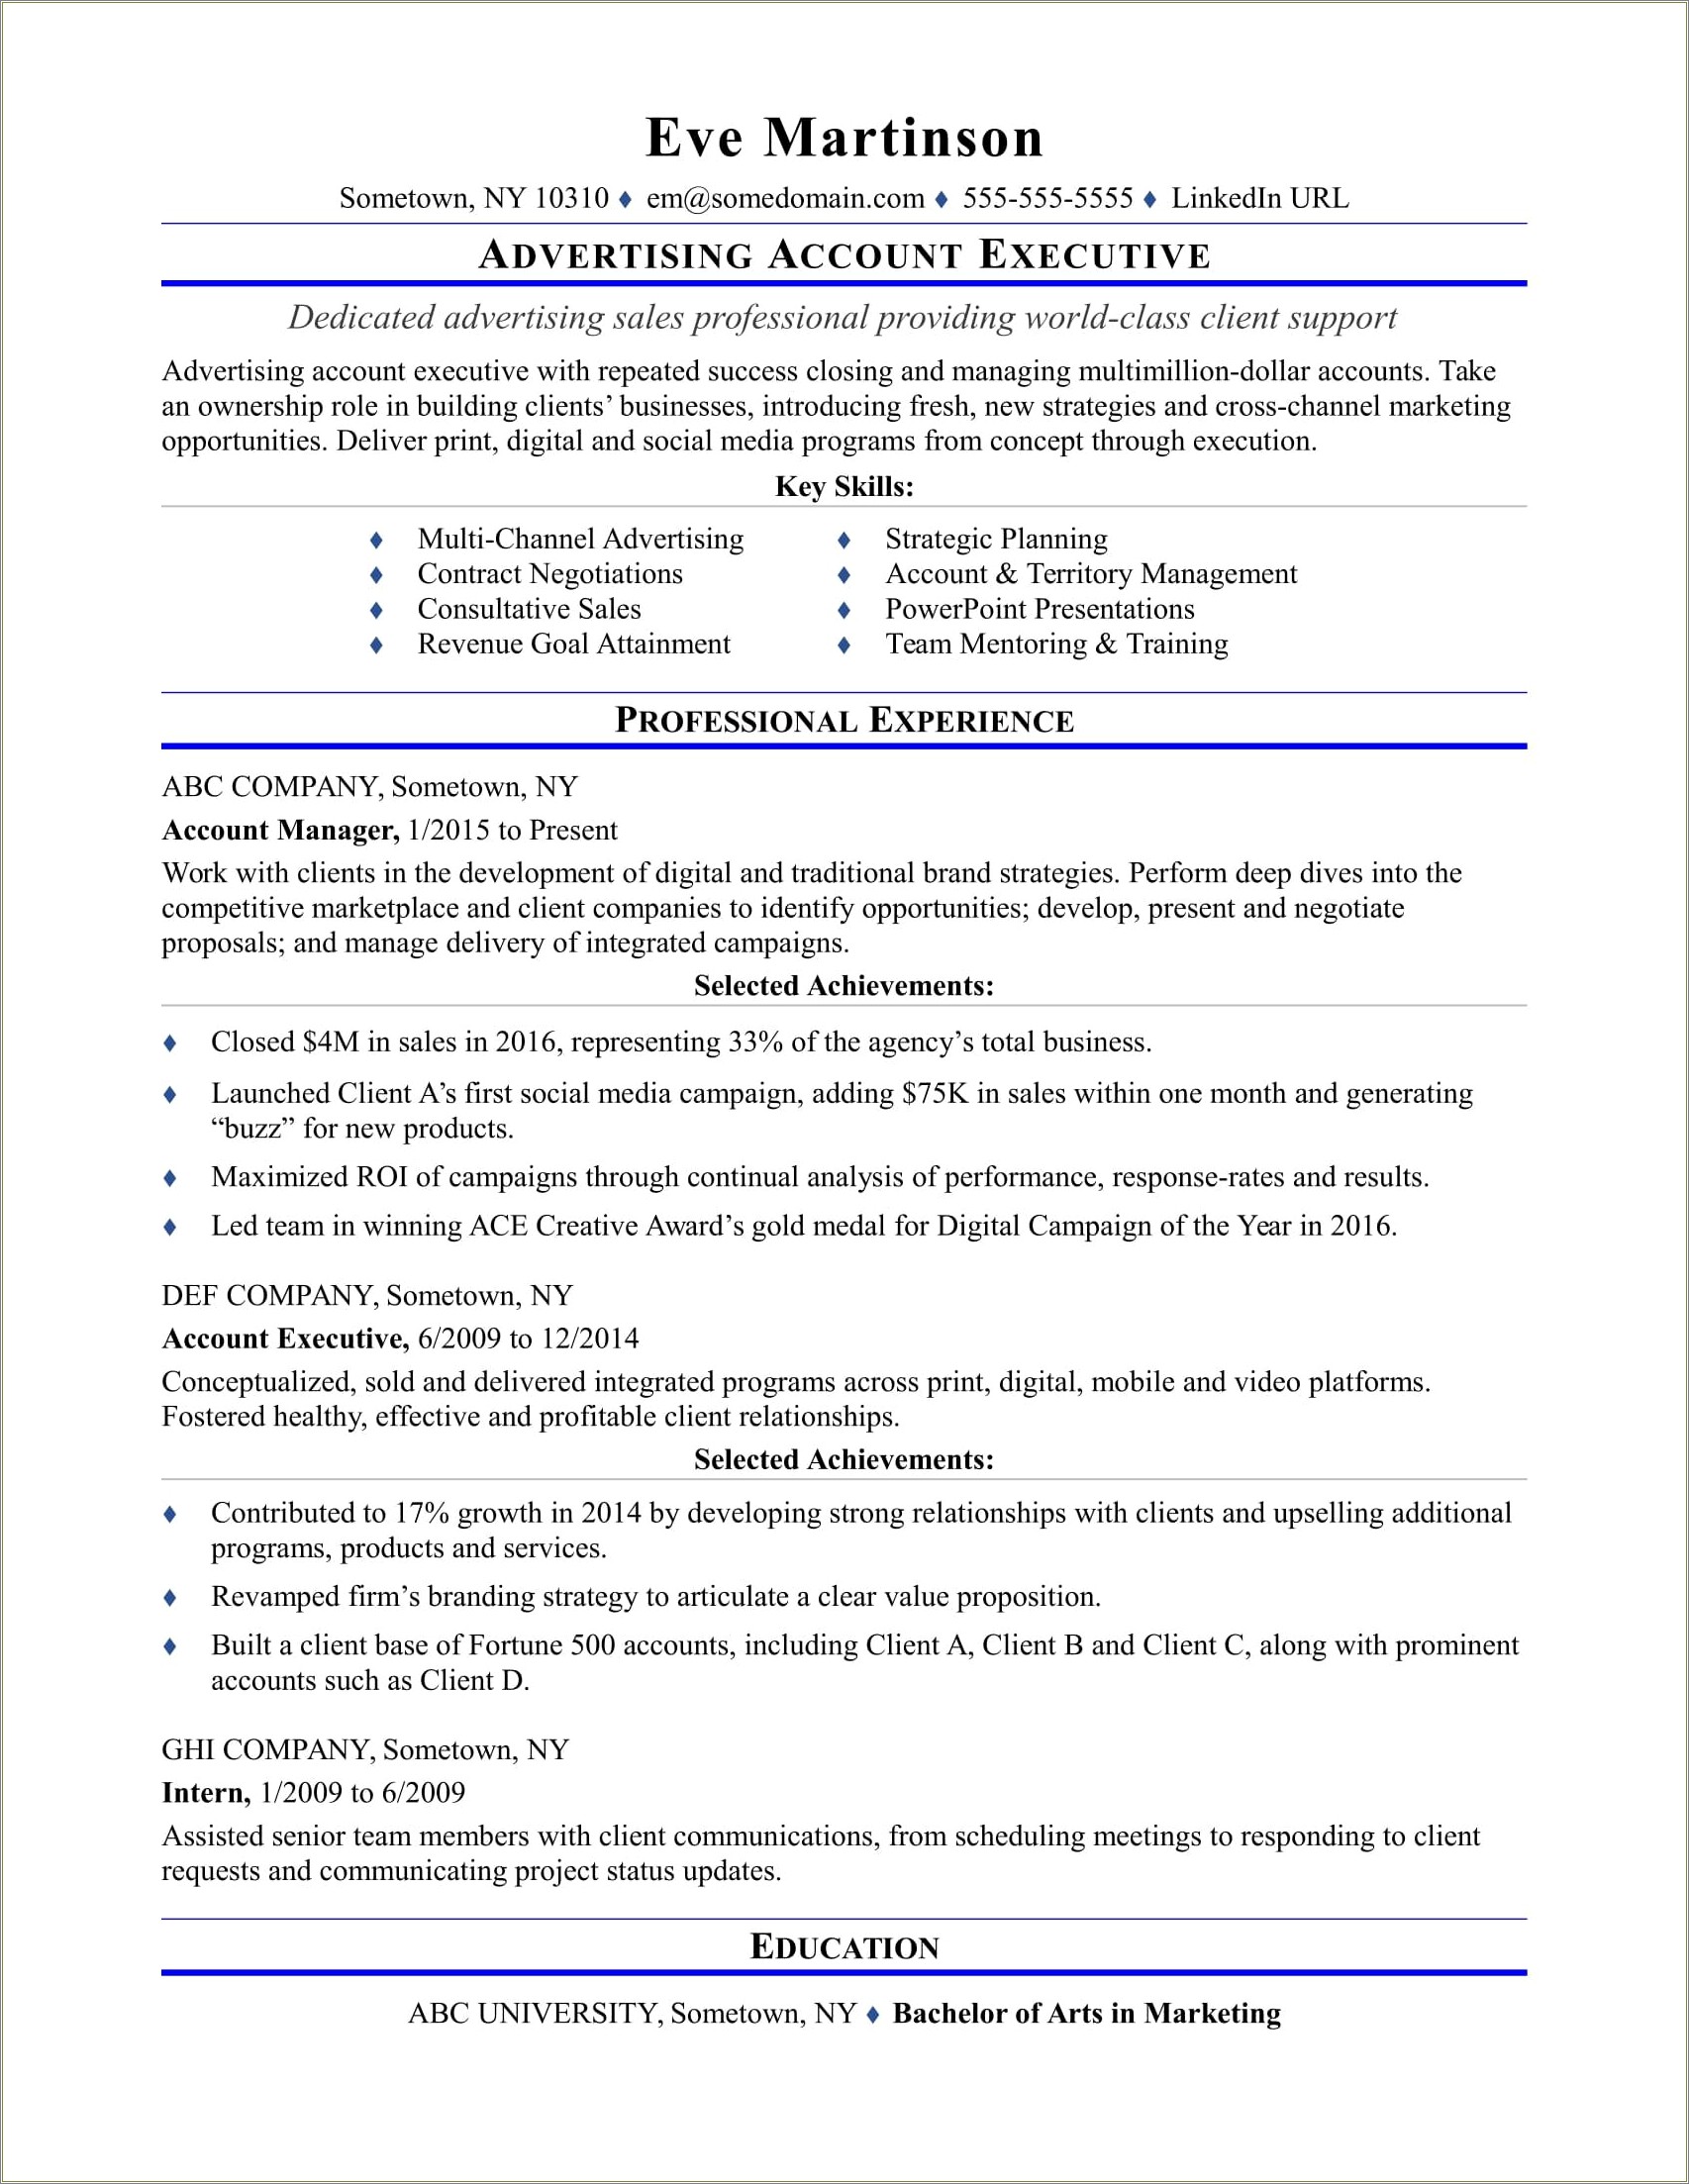 Accounts Executive Job Description For Resume